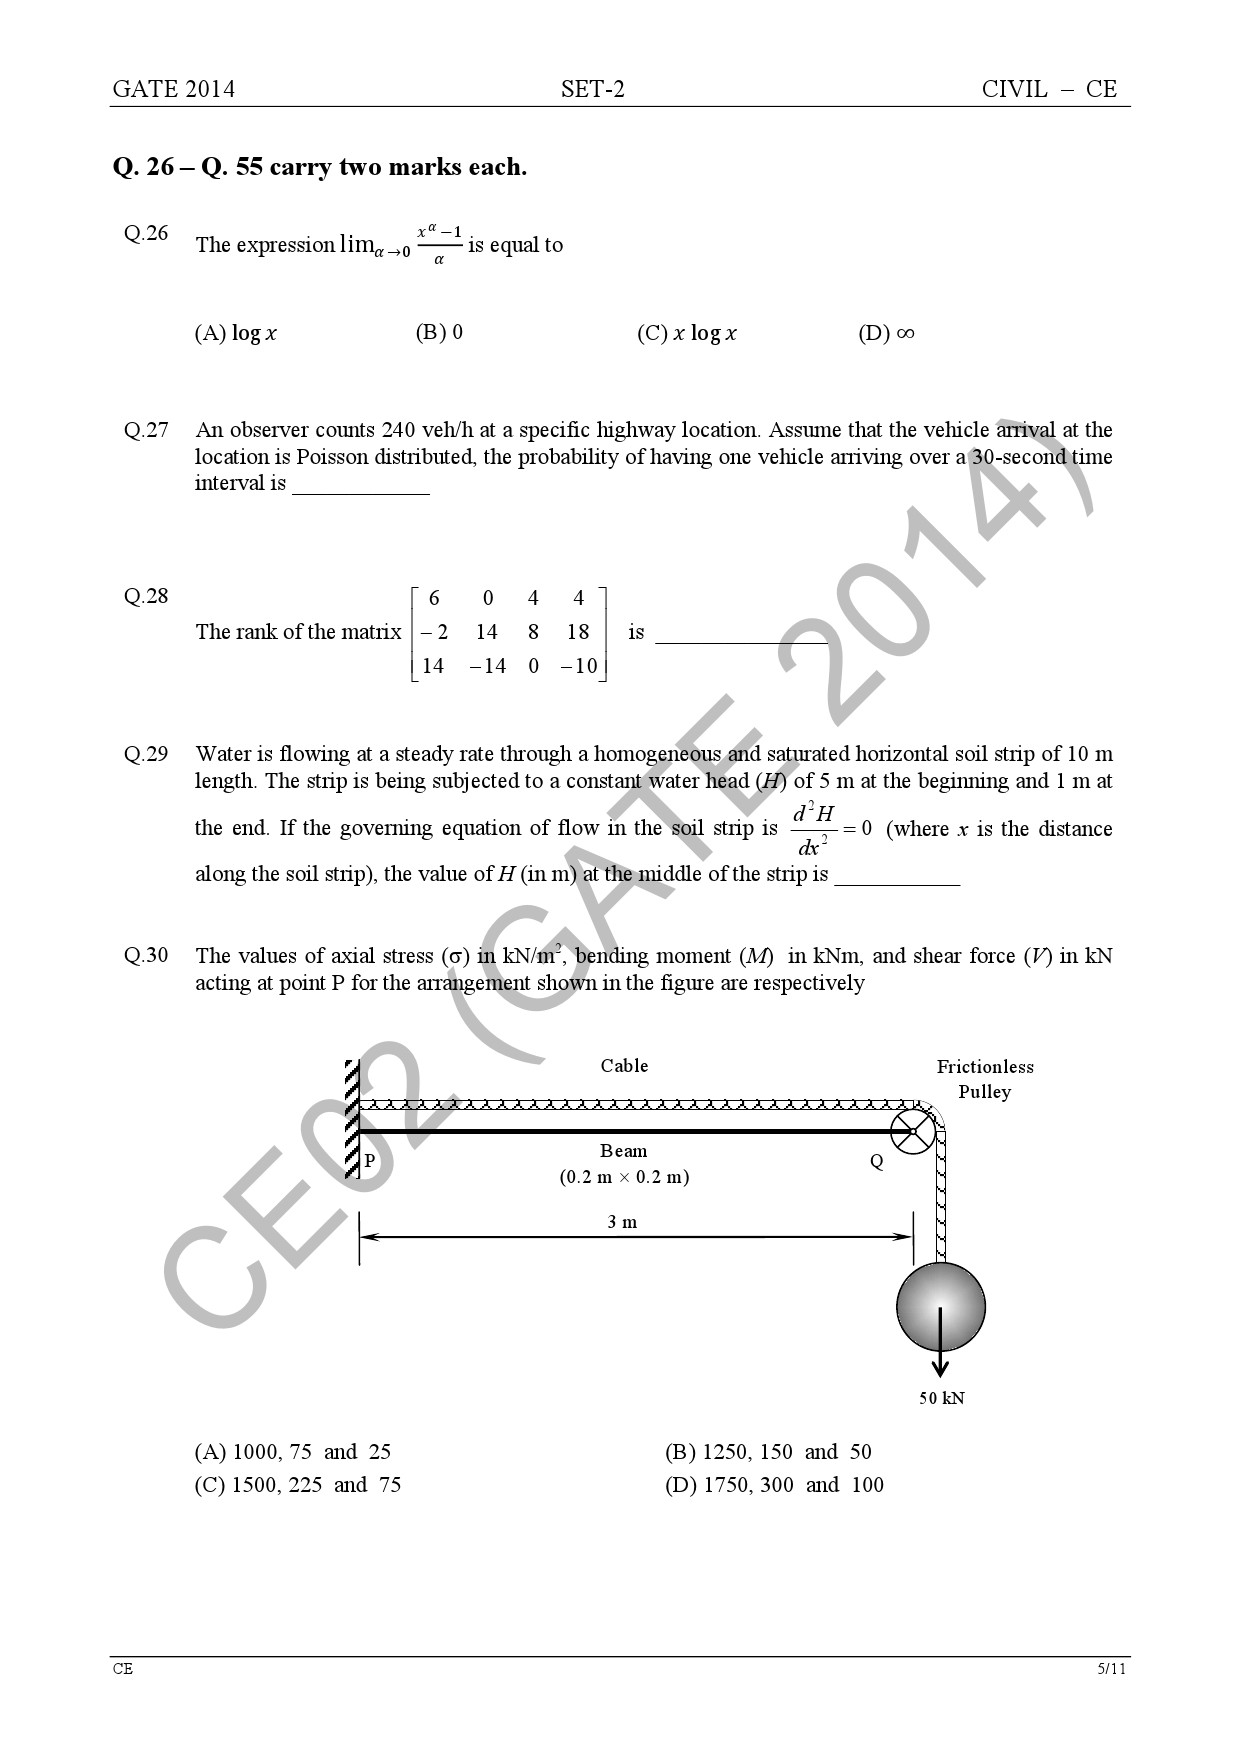 GATE Exam Question Paper 2014 Civil Engineering Set 2 11